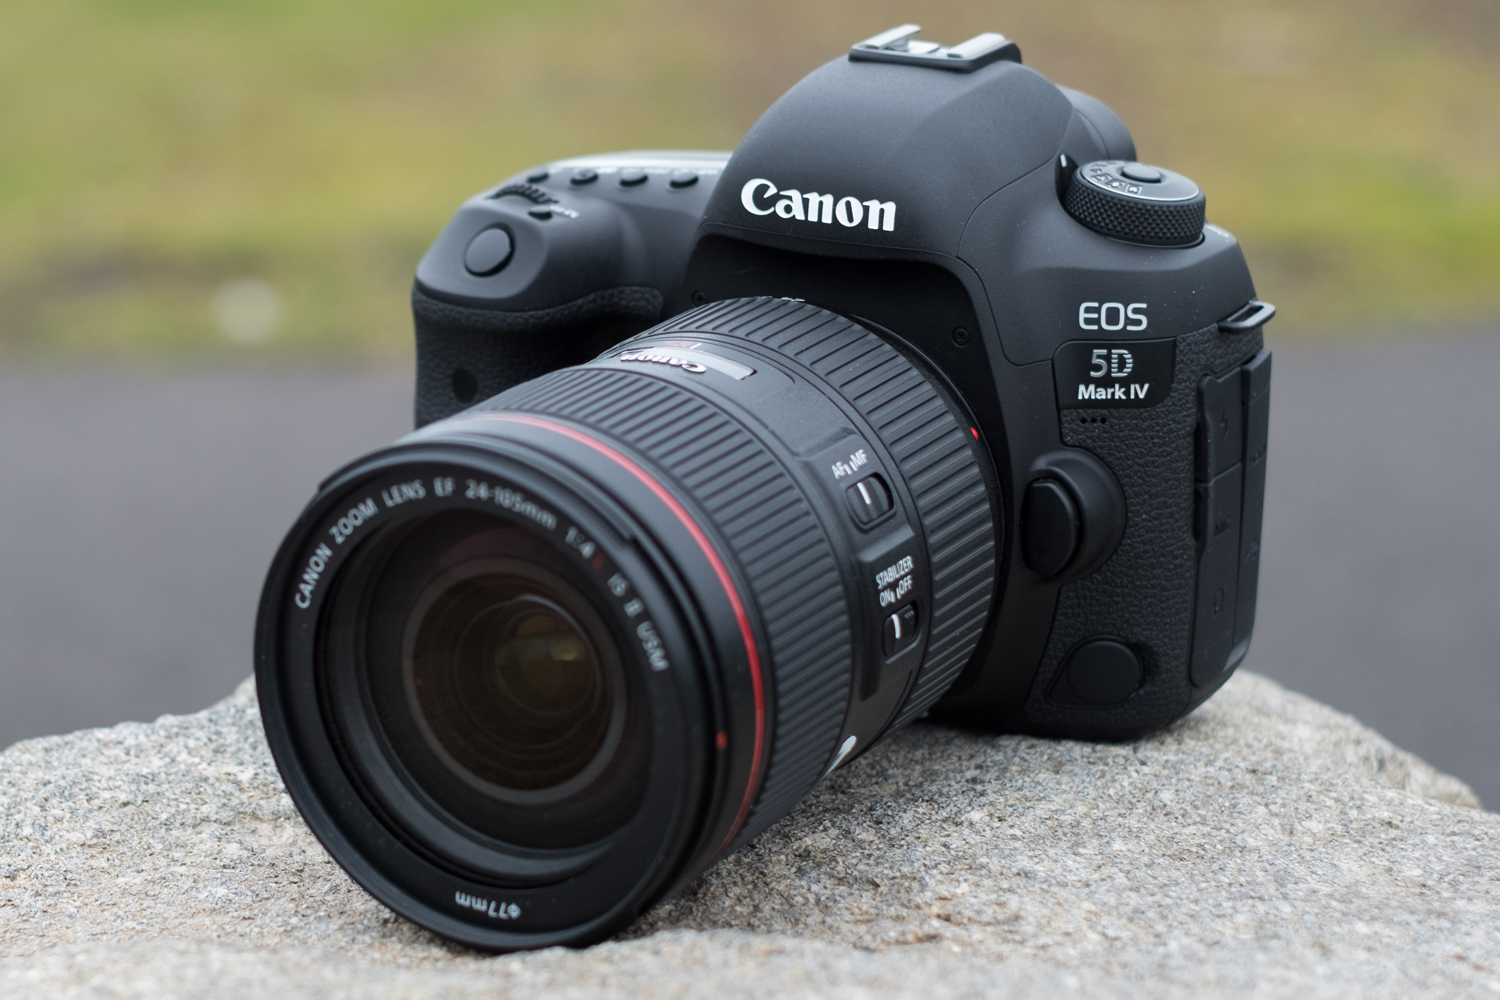 Kostuums Beukende Verandering Canon EOS 5D Mark IV Review | Digital Trends